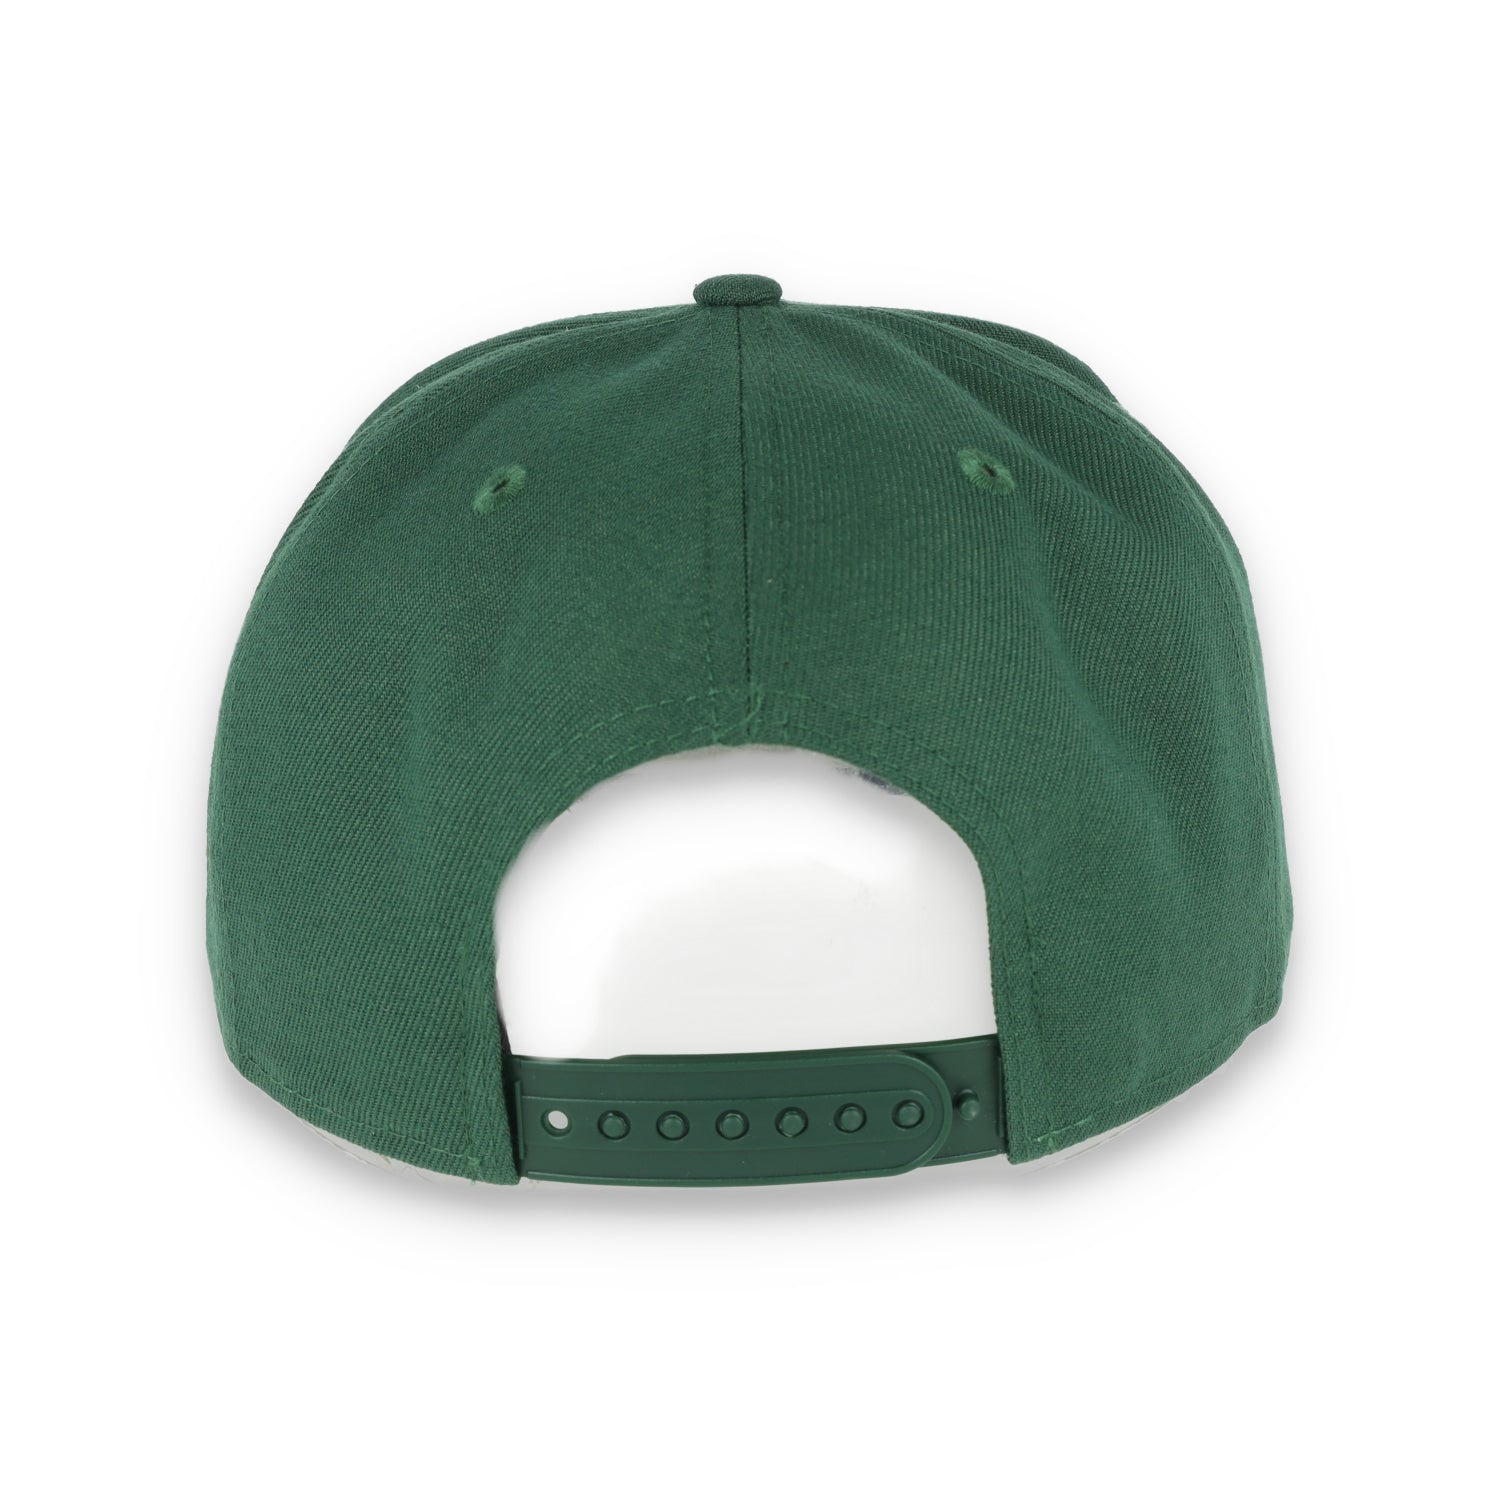 New Era Green Bay Packers Icon E1 9Fifty Snapback Hat-Green